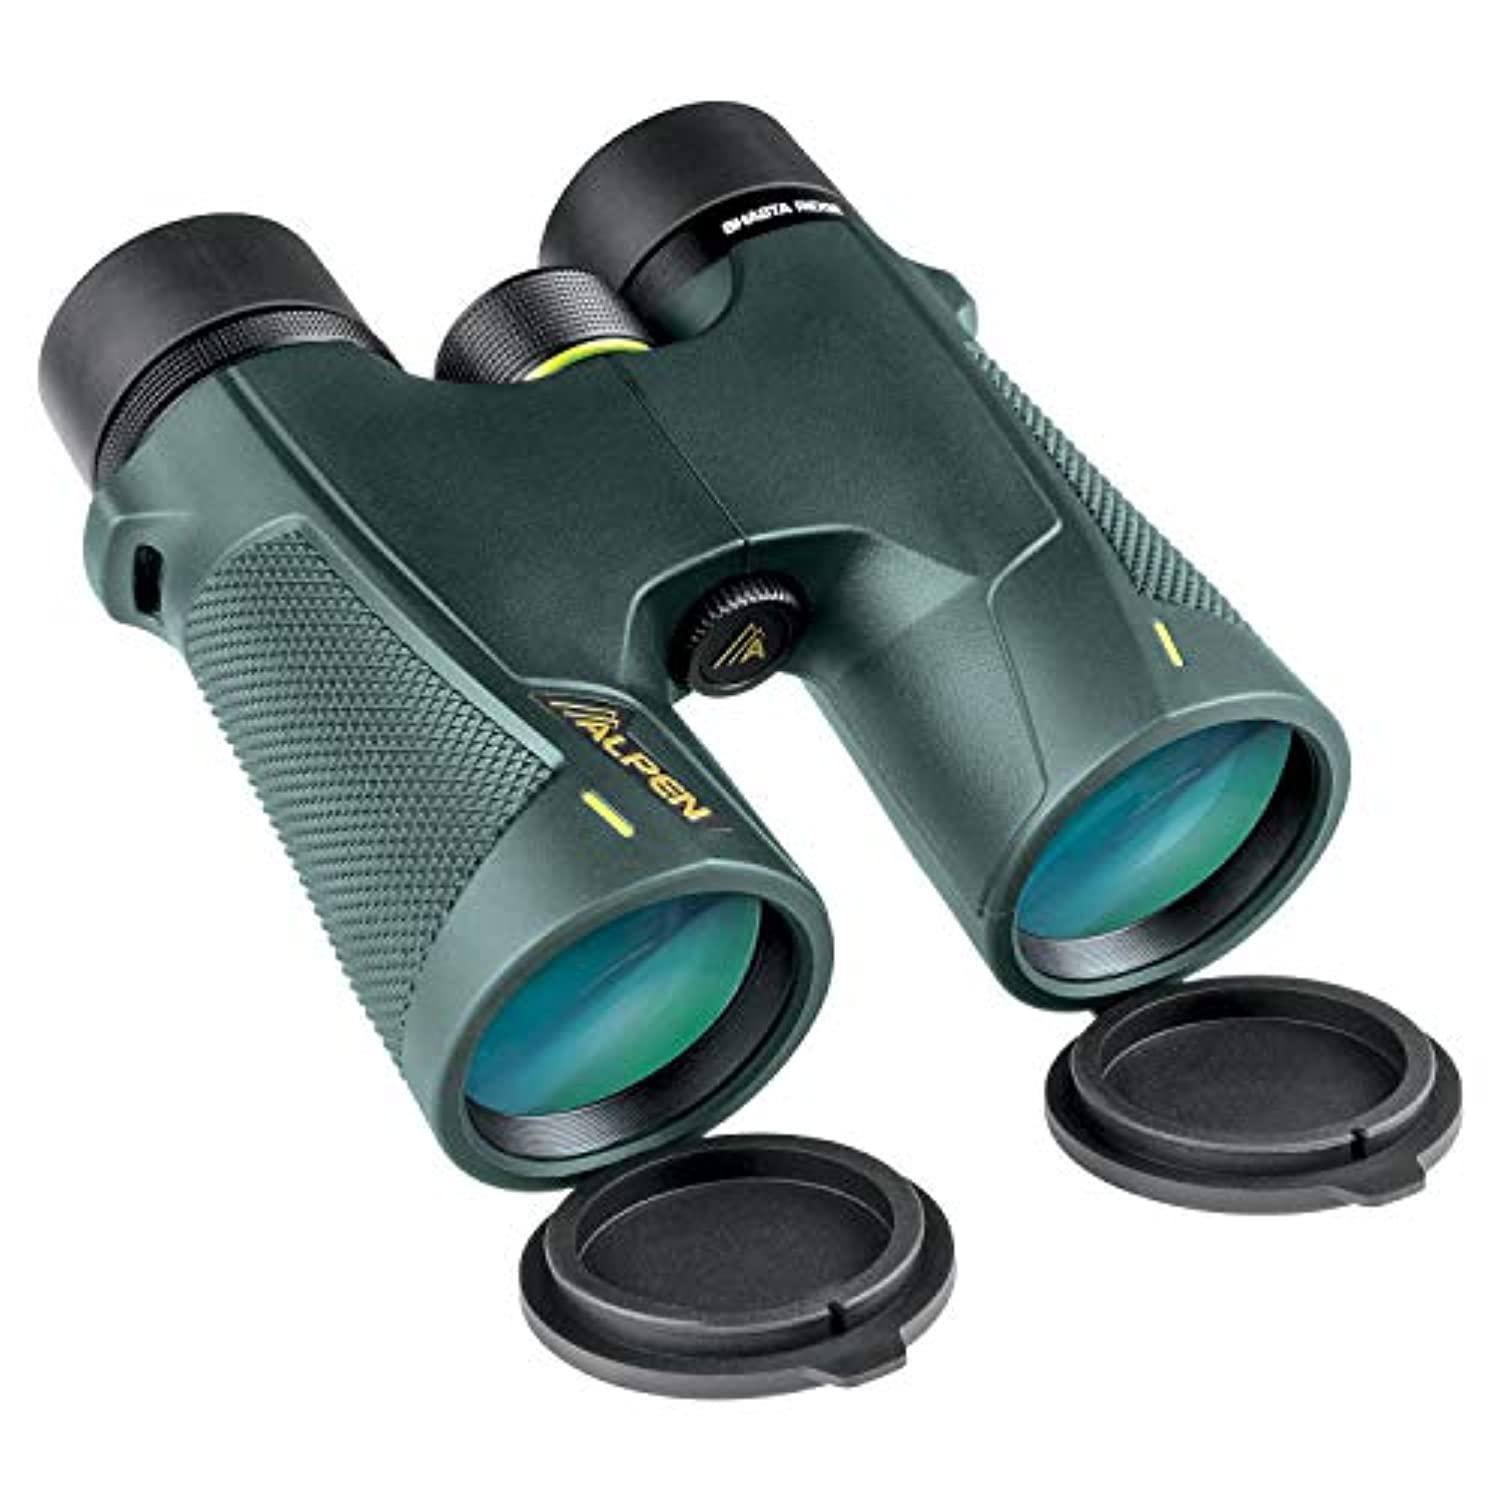 alpen shasta ridge 10x42 waterproof binoculars with bak4 optics